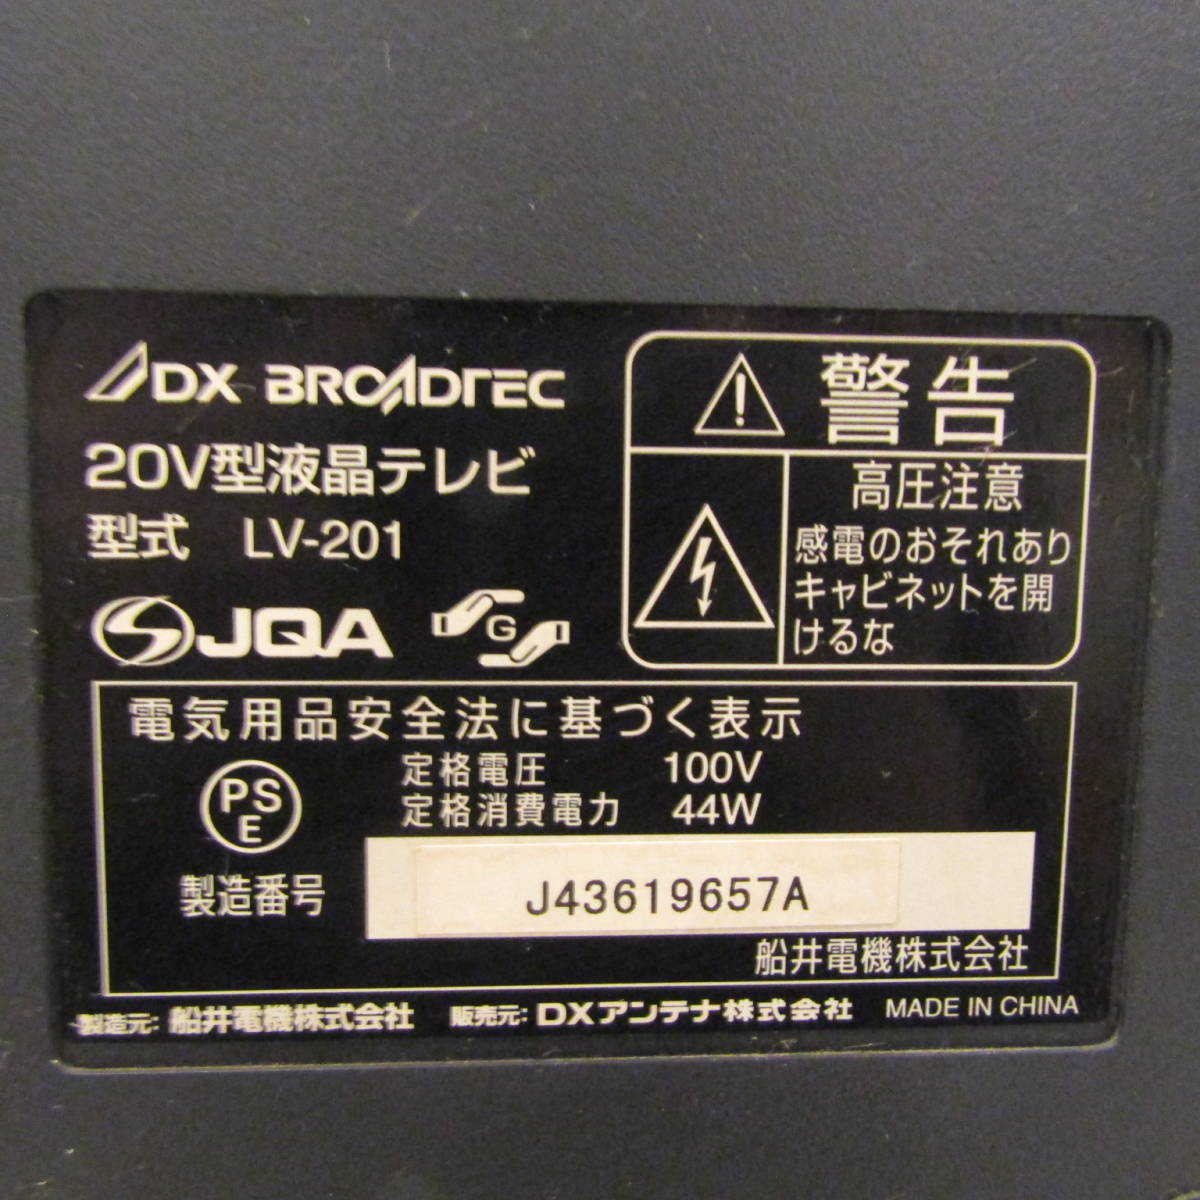 QB6907 DX BROADTEC 液晶テレビ 20V型 LV-201 2006年製 映像 TV 家電 電化製品 中古 リサイクル 福井_画像9